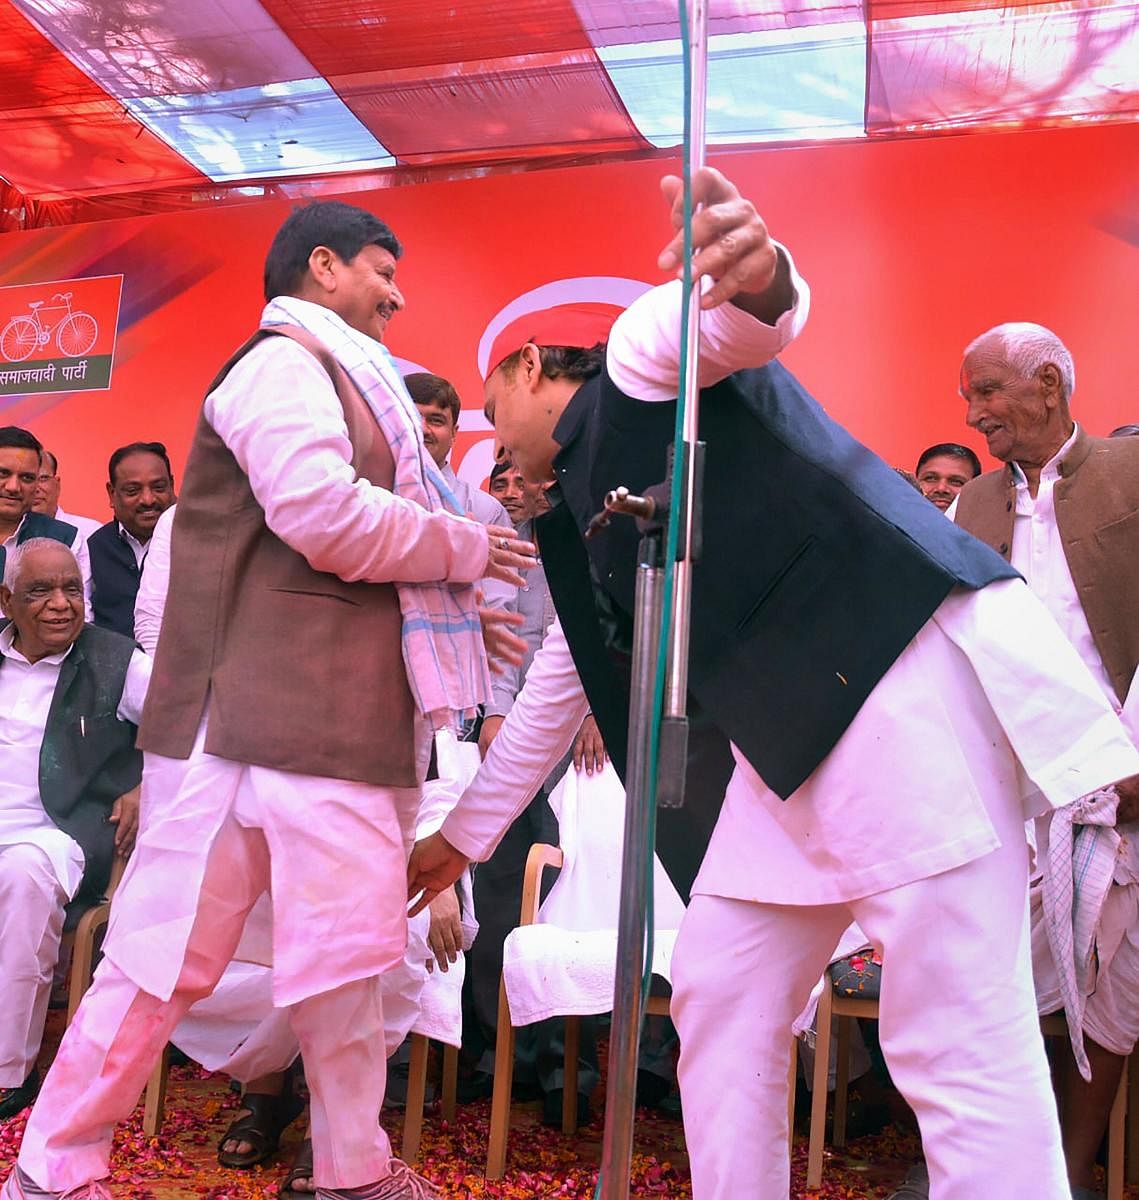 SP leader Akhilesh Yadav seeks blessings from Pragatisheel Samajwadi Party leader Shivpal Singh Yadav during an event to celebrate Holi festival, in Etawah, on March 10, 2020. PTI